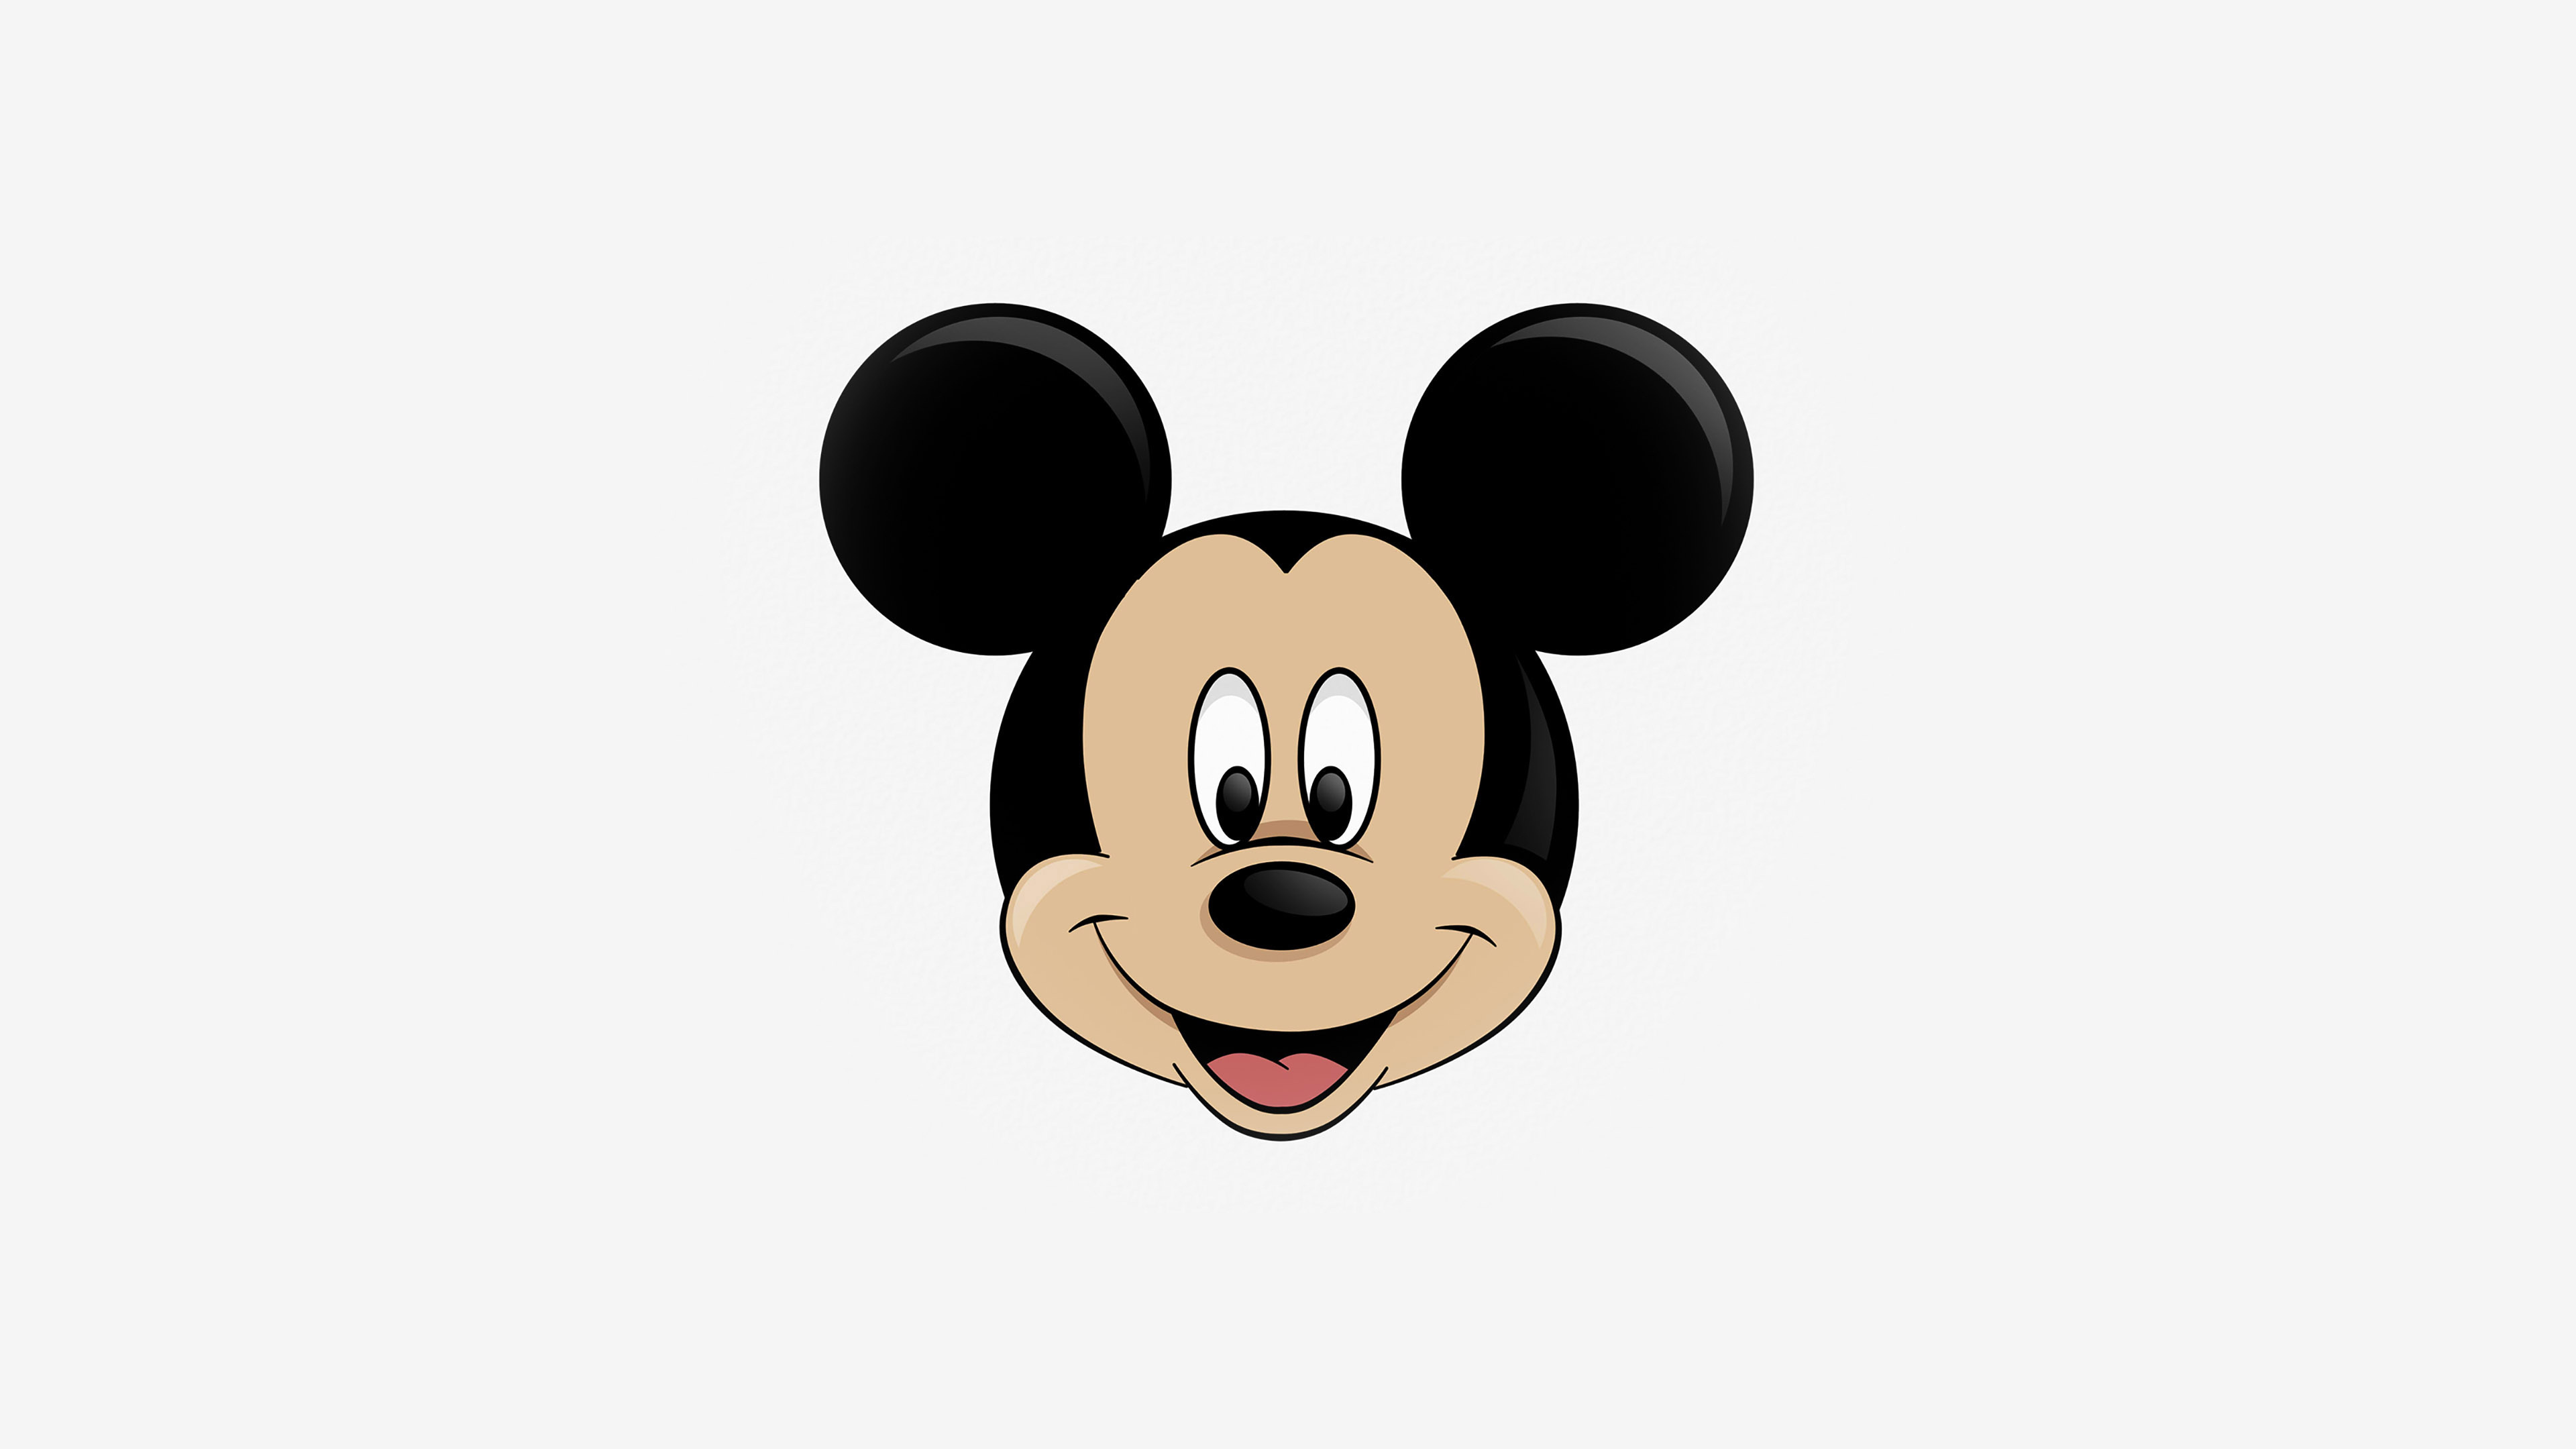 Wallpaper for desktop and laptop, Mickey Mouse logo, Disney-inspired design, 3840x2160 4K Desktop